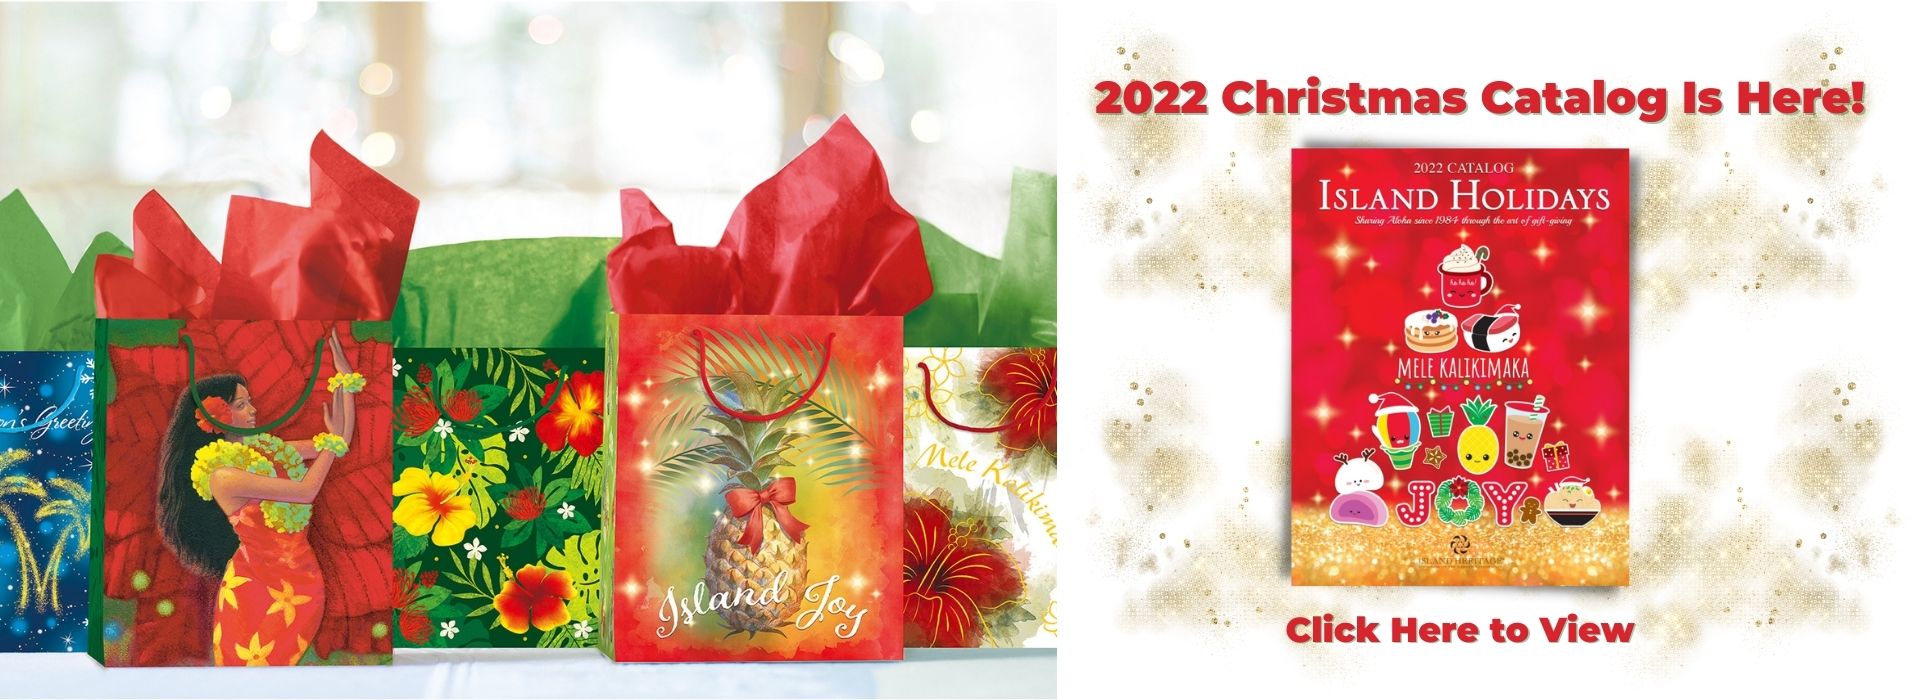 2022 Christmas Catalog